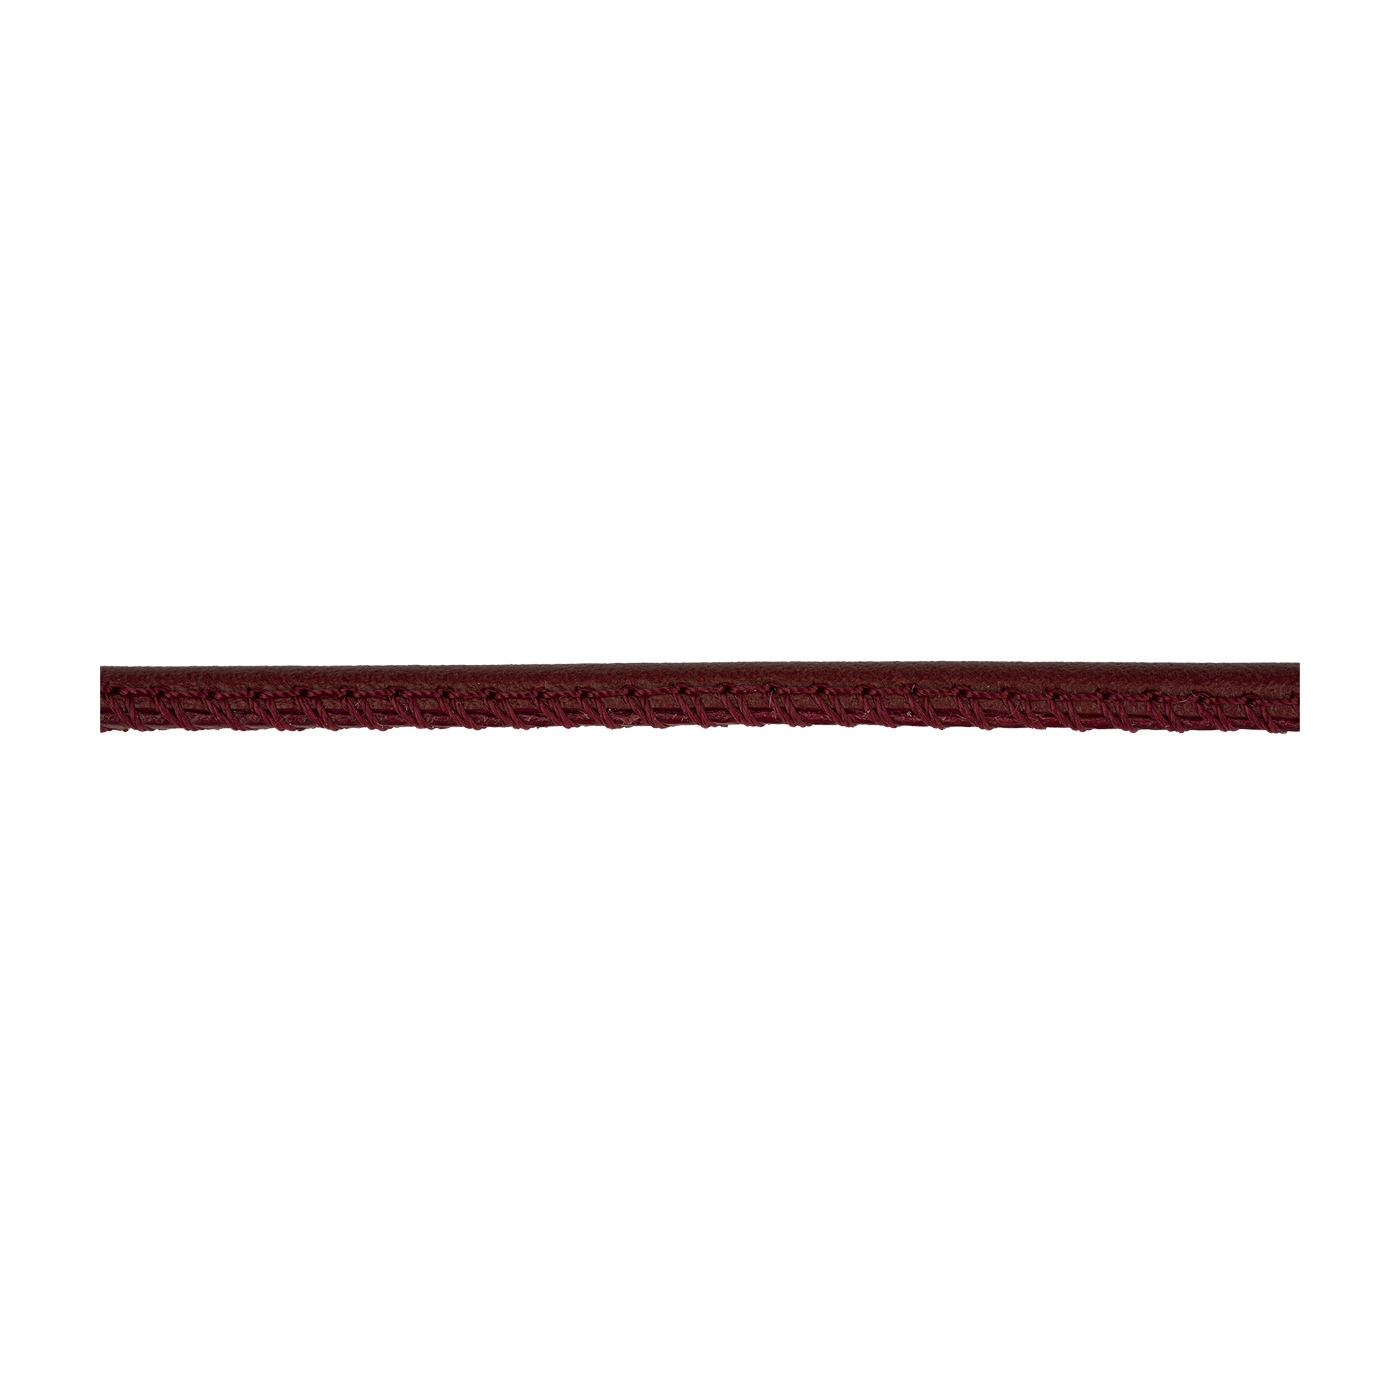 Lederband, bordeaux, ø 2,5 mm, aus Kalbsleder - 1 m